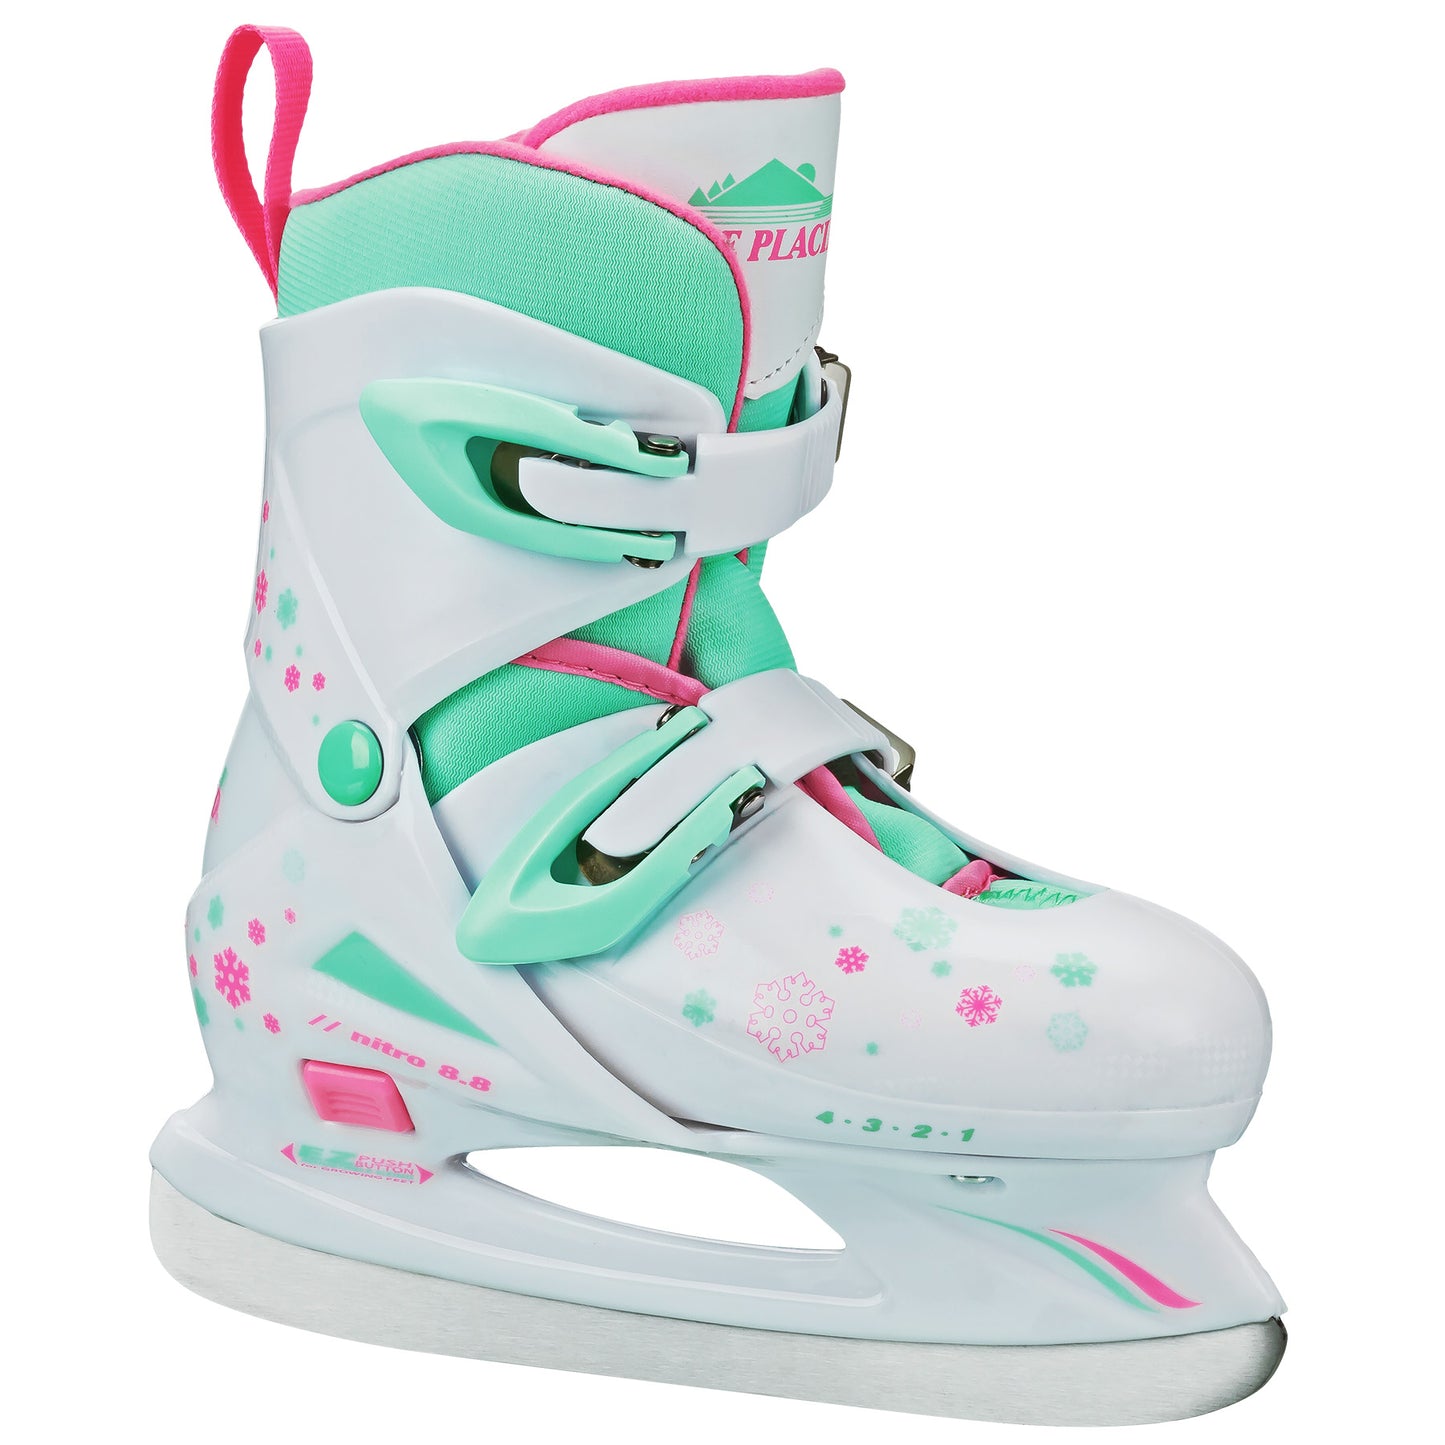 Lake Placid Nitro Girl's Adjustable Ice Skates